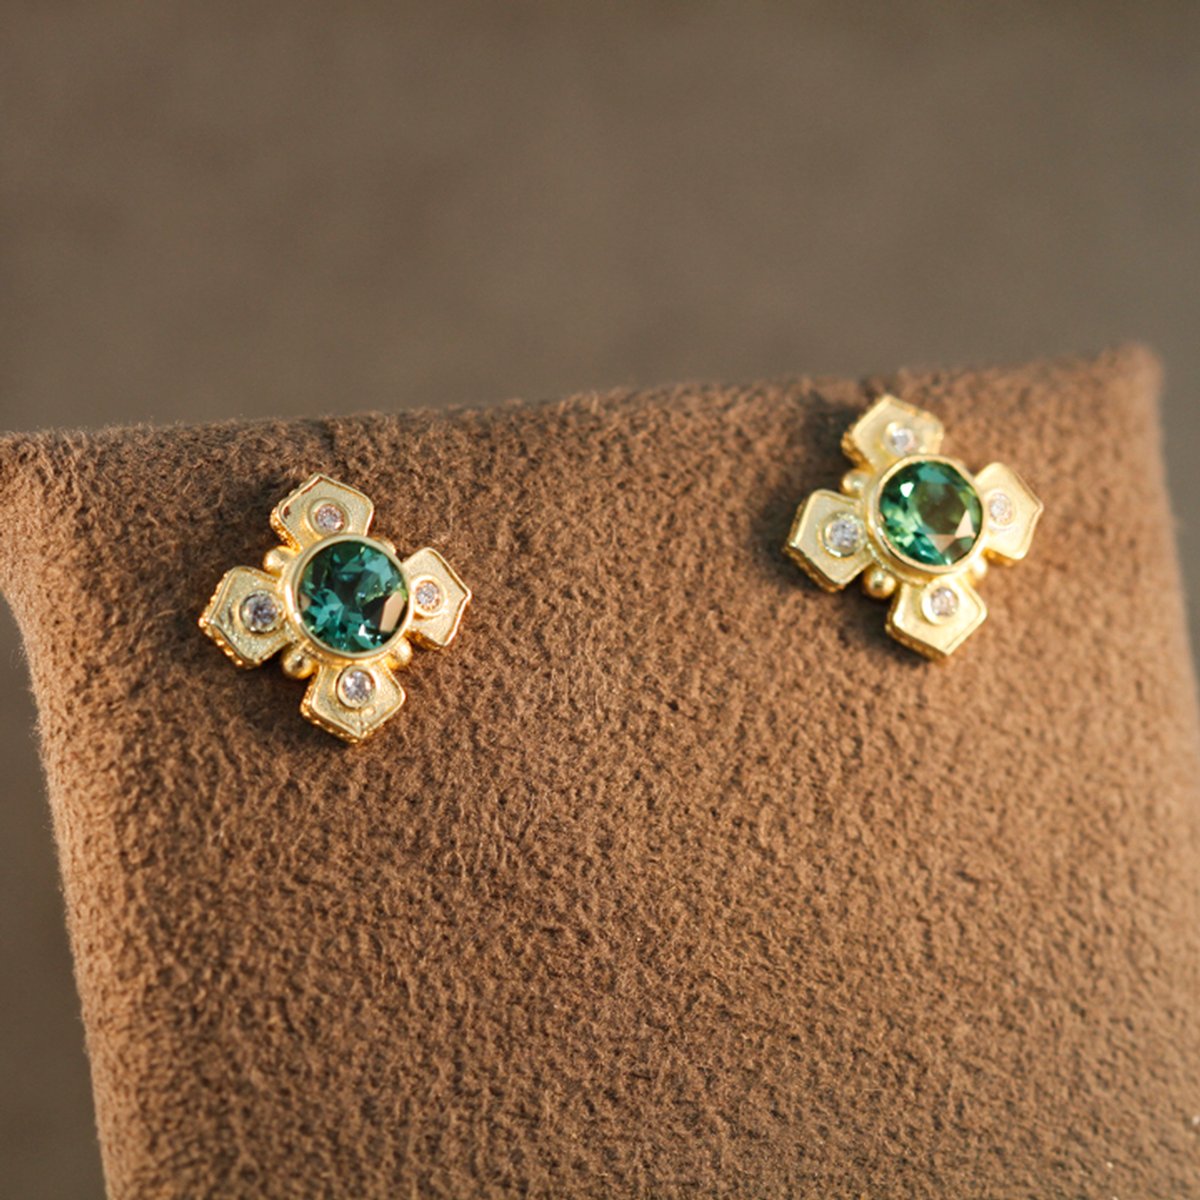 Persephone 14K Gold, Green Tourmaline and Diamond Earrings